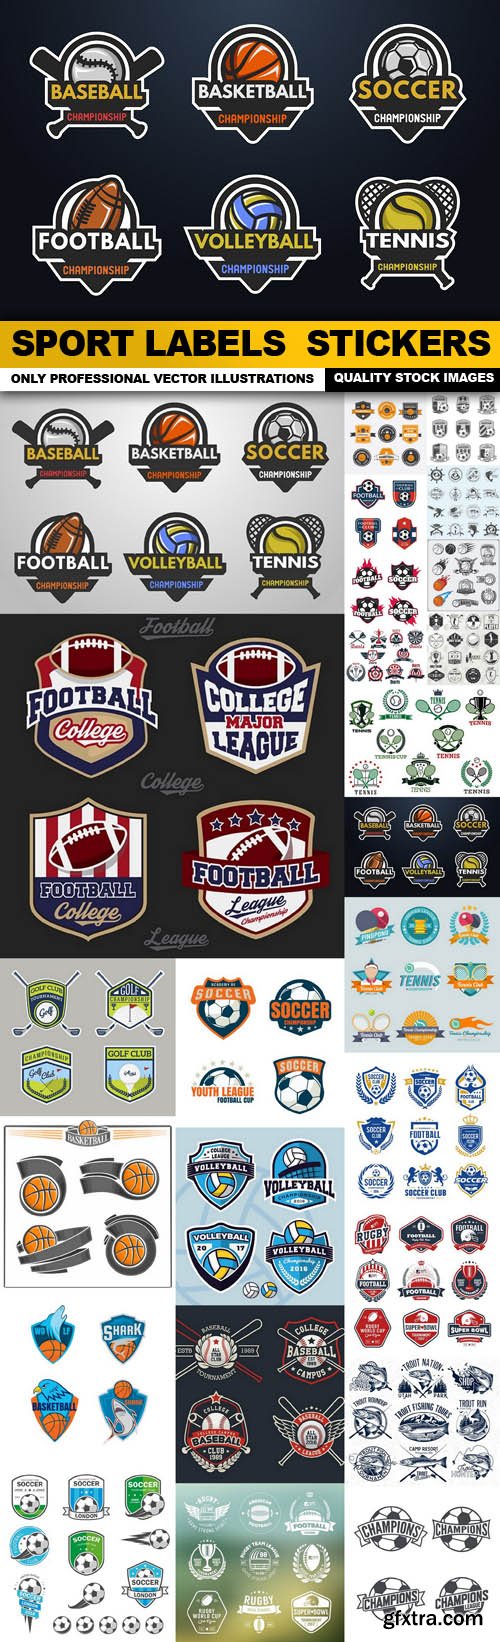 Sport Labels Stickers - 25 Vector